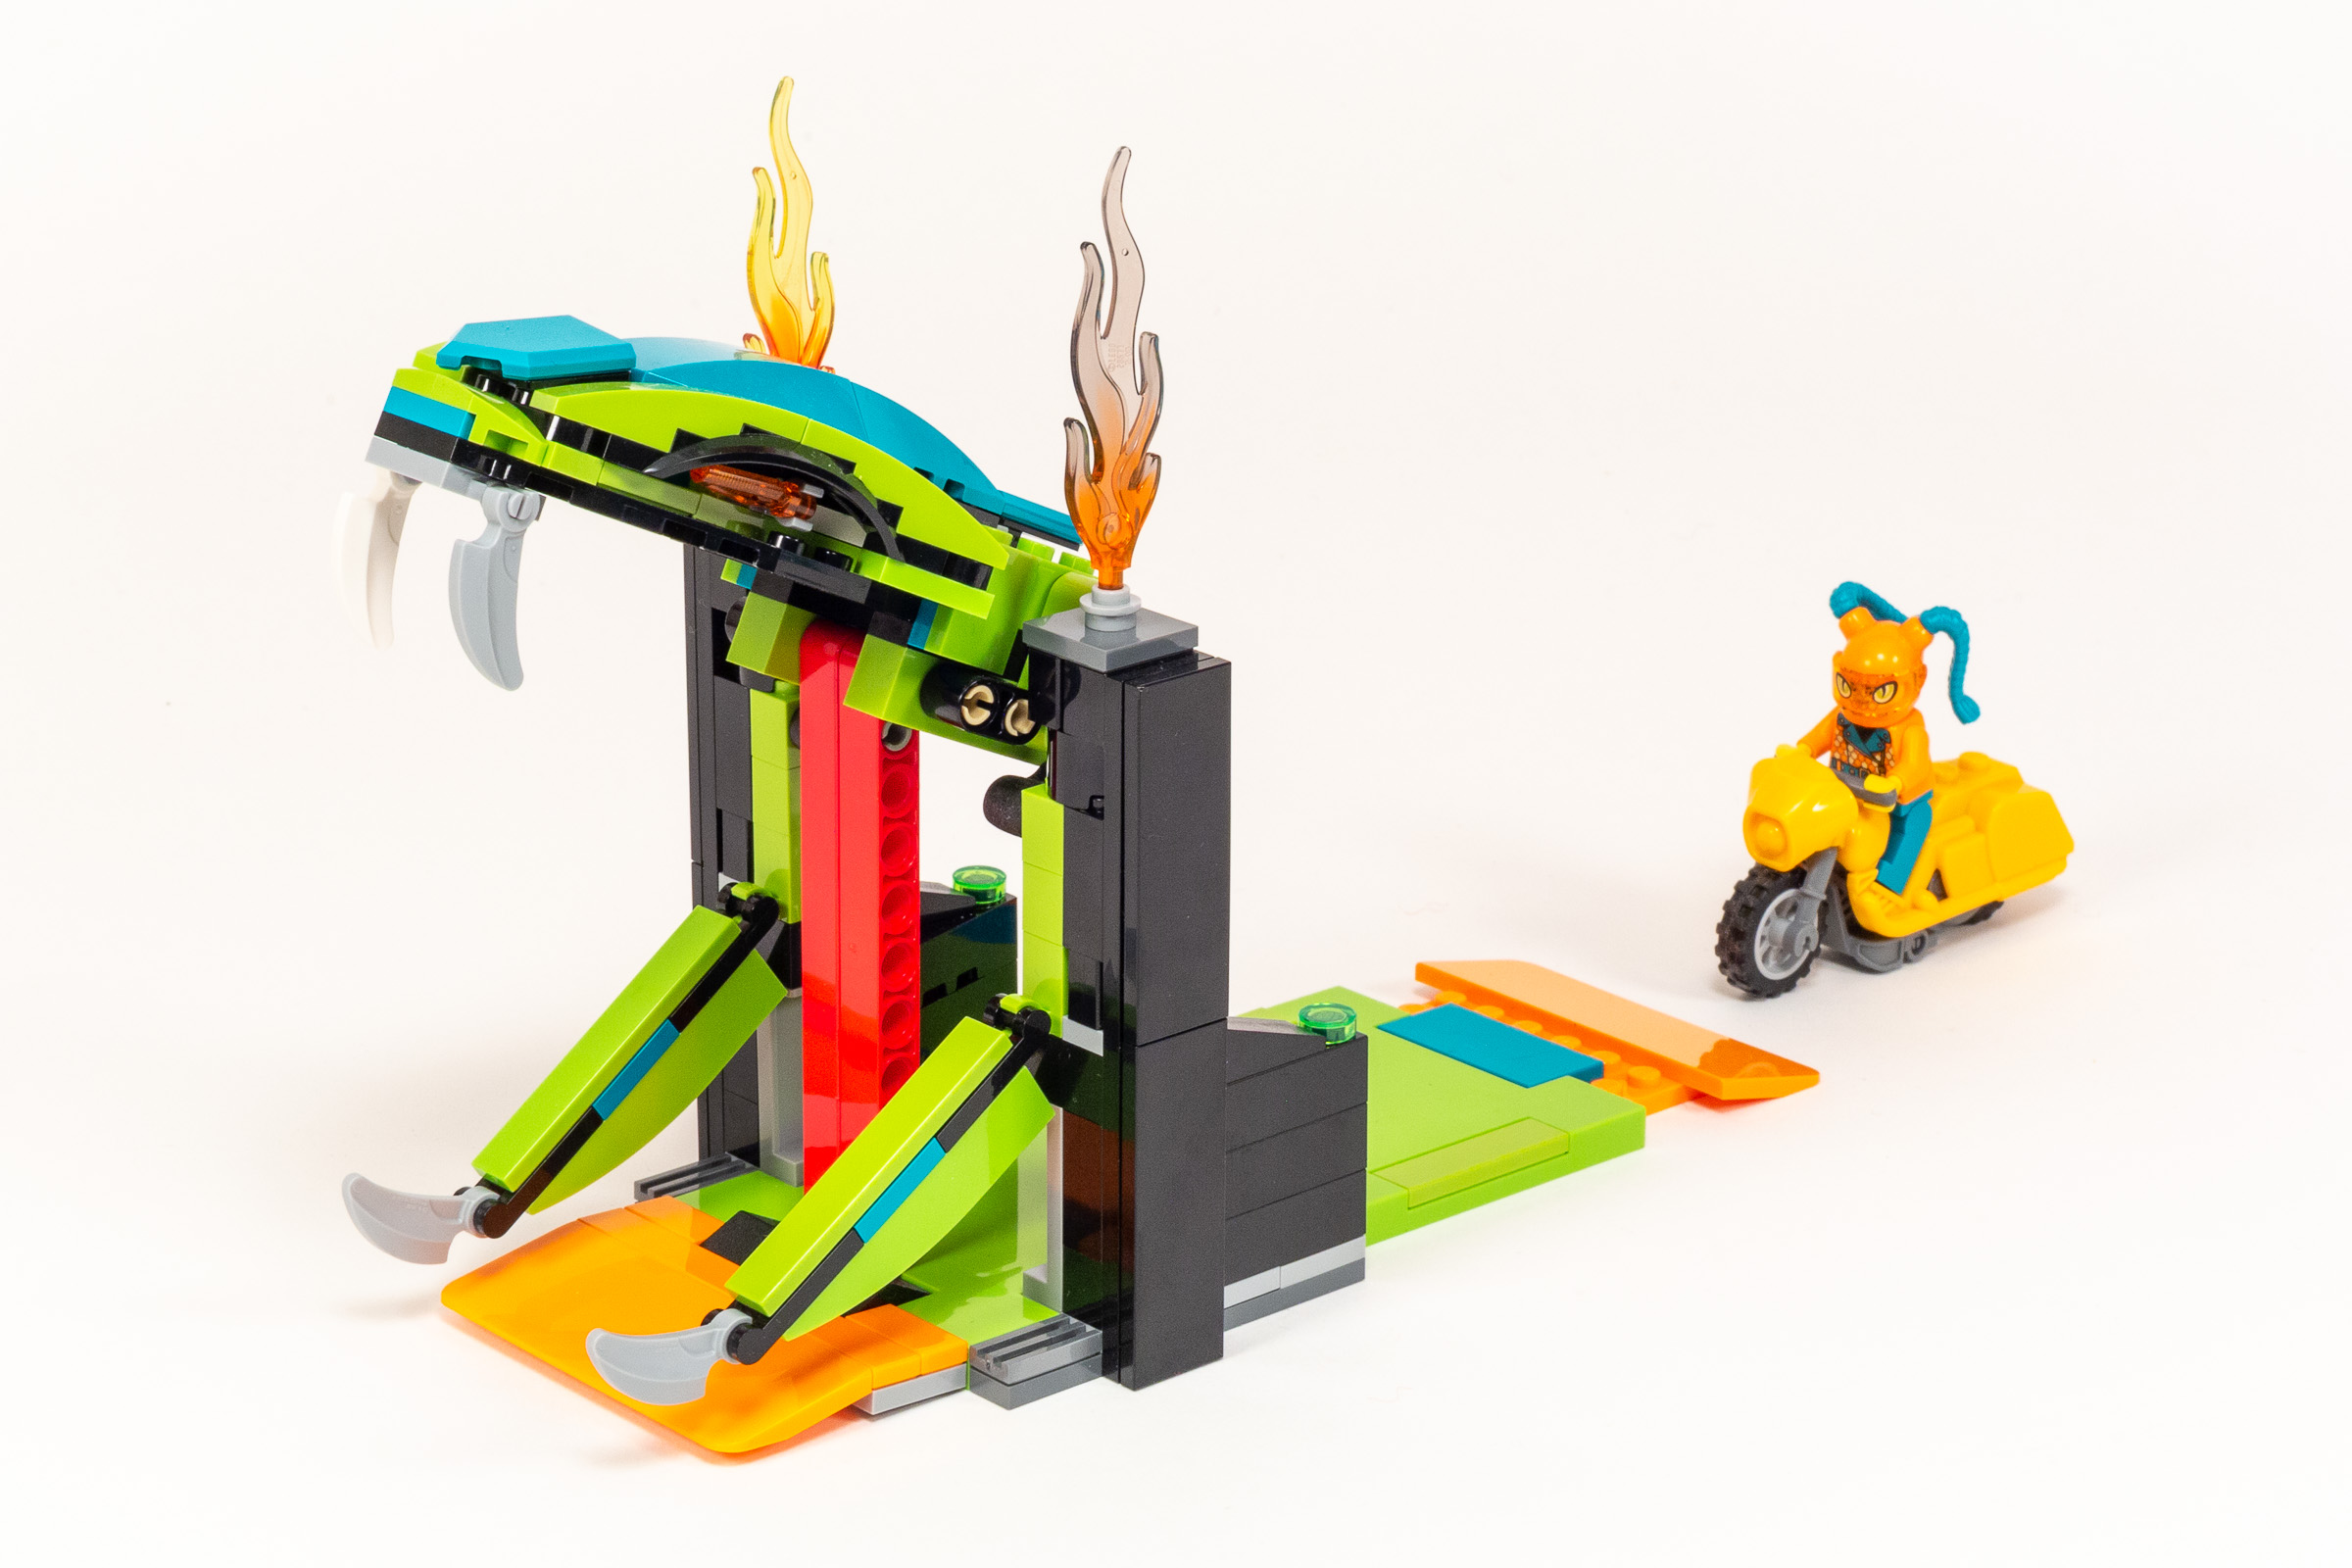 LEGO City Stuntz 60339 Arena delle Acrobazie, Monster Truck, Moto